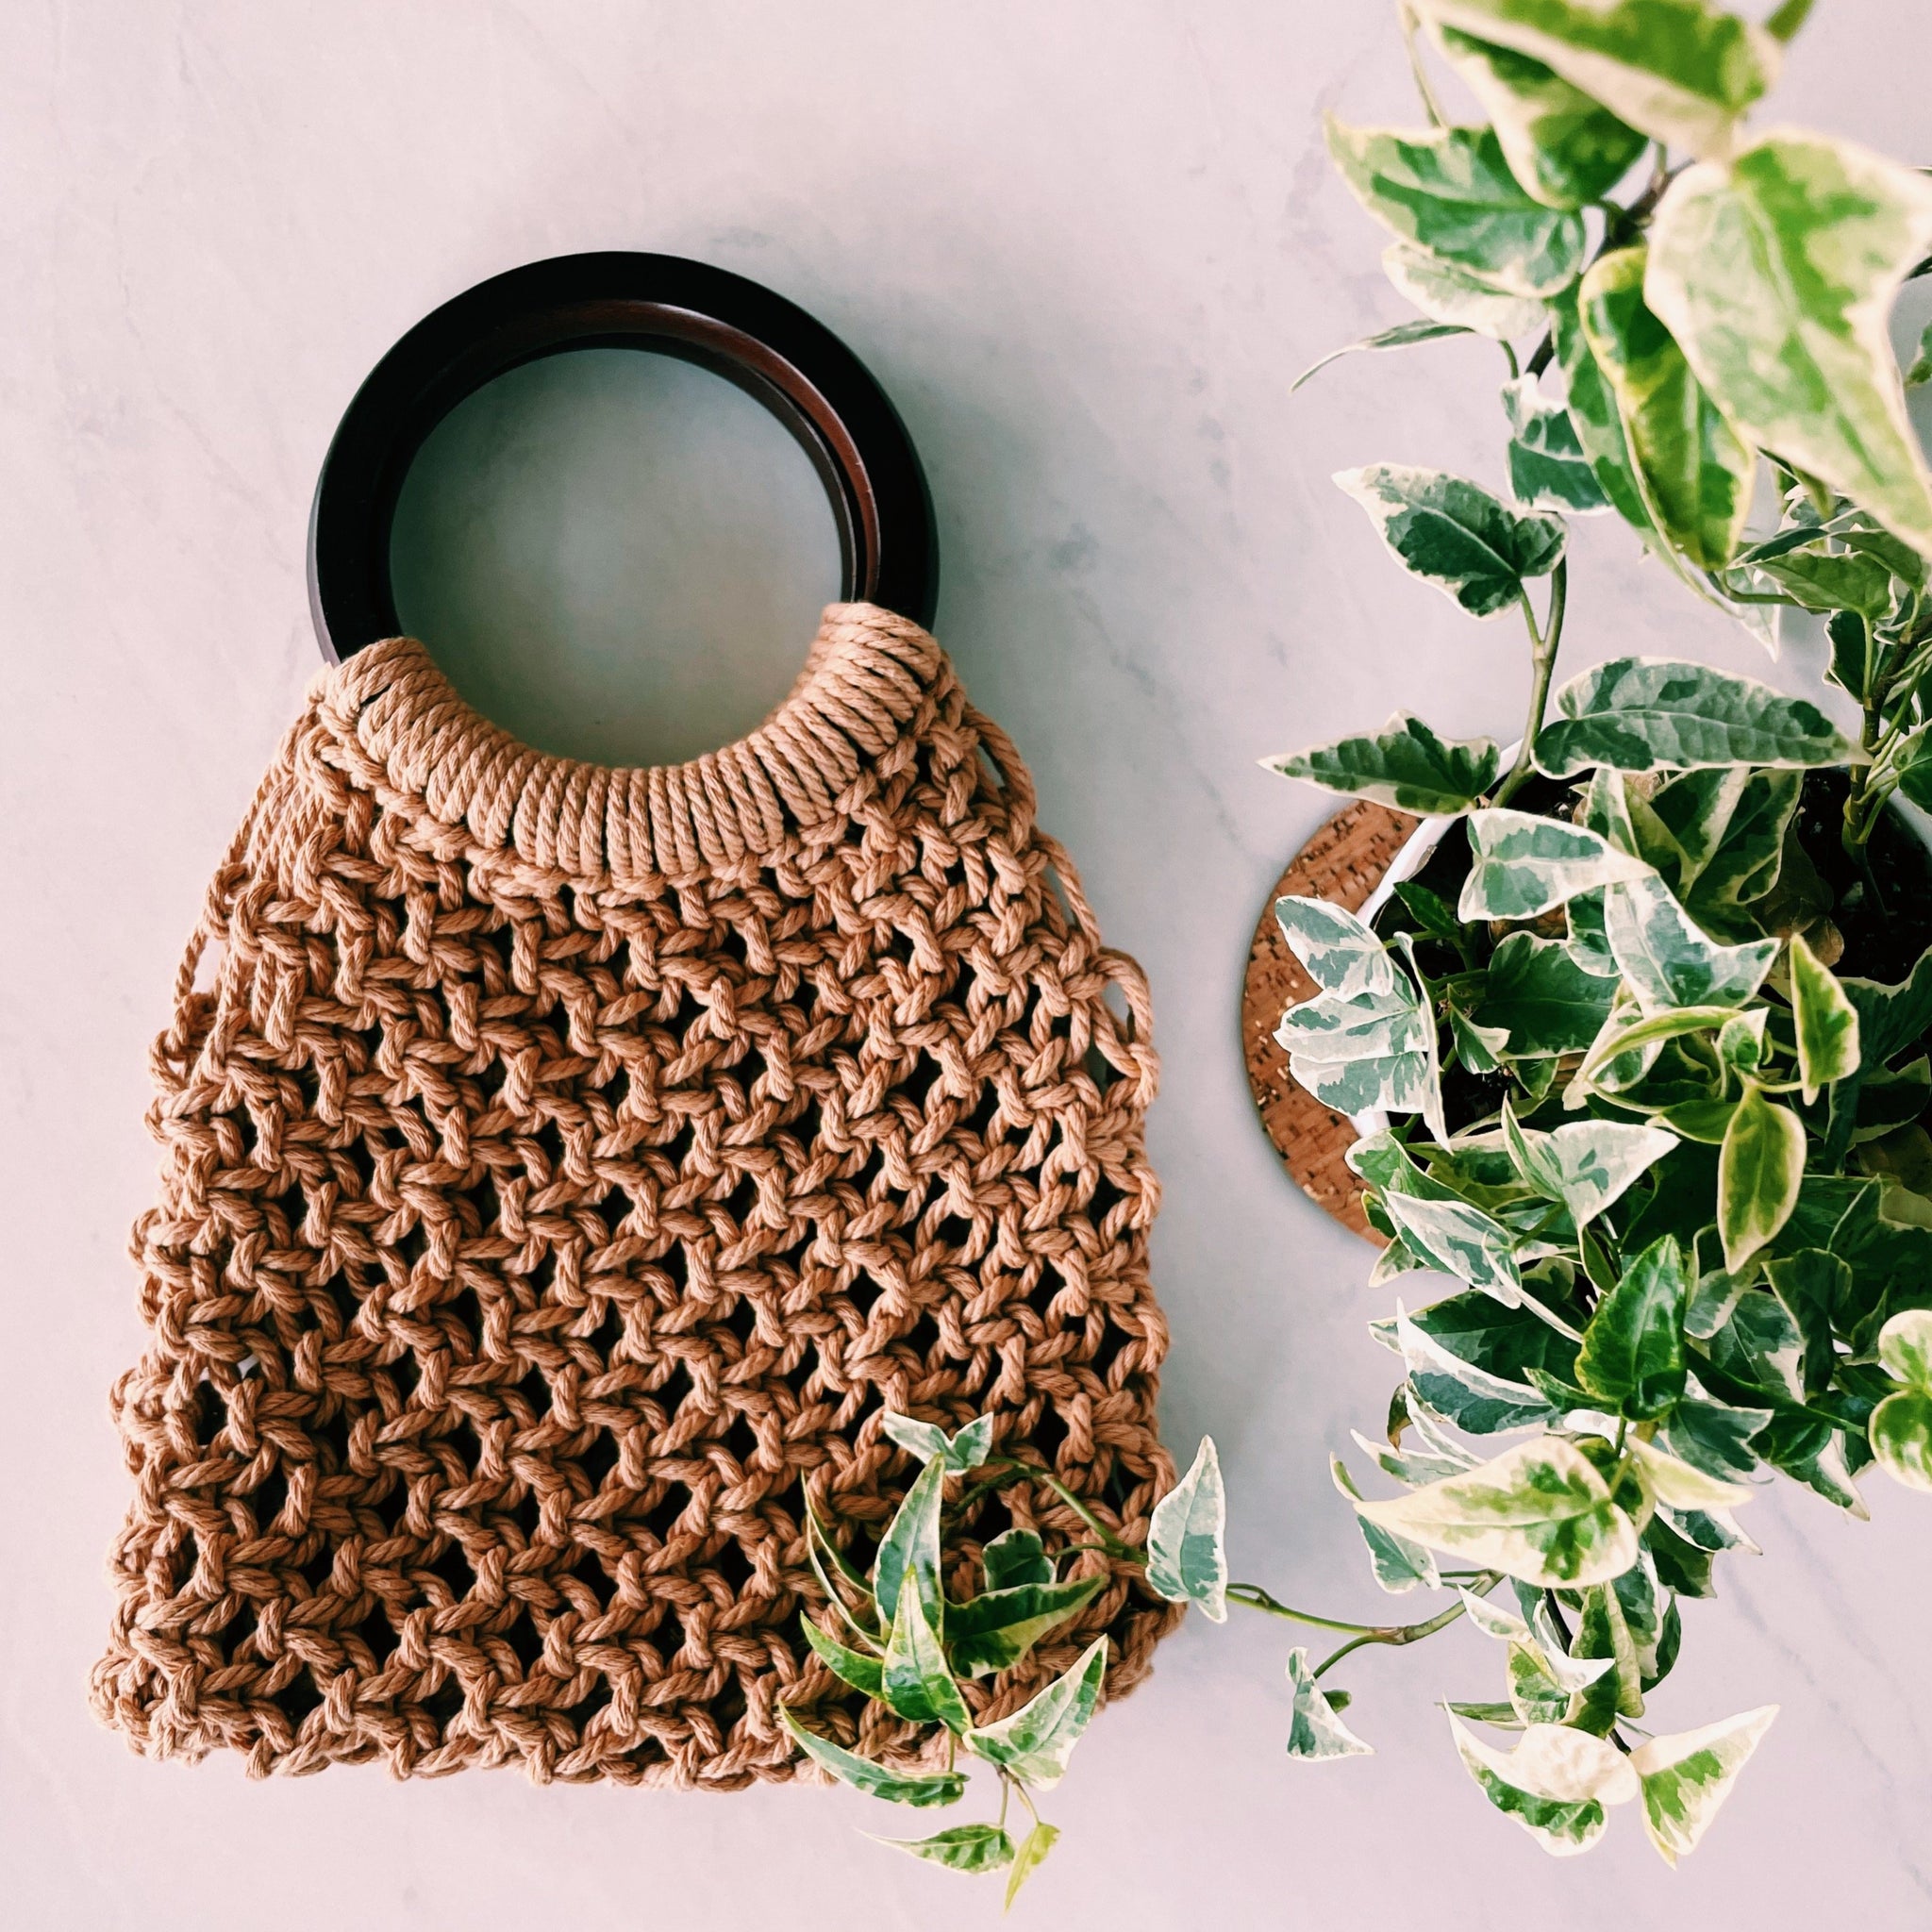 Buy Macrame Tote Bag With Metal Handles / Macrame Handbag / Drawstring  Cotton Liner / Boho Inspired Fashion / Unique / Handmade Online in India -  Etsy